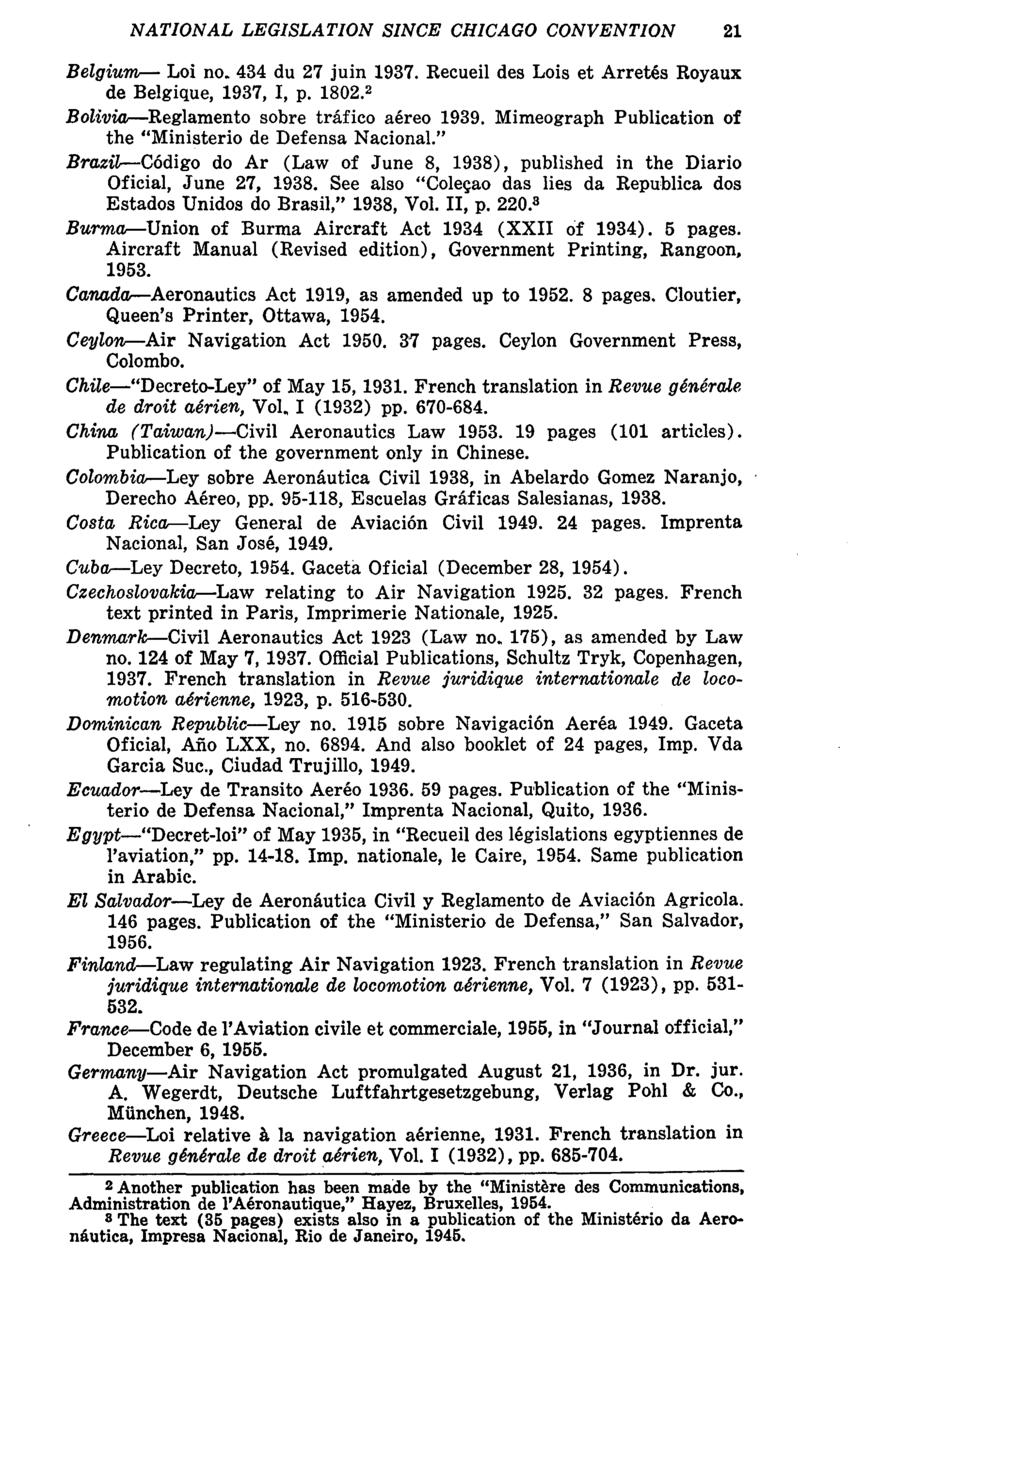 NATIONAL LEGISLATION SINCE CHICAGO CONVENTION Belgium-- Loi no. 434 du 27 juin 1937. Recueil des Lois et Arretks Royaux de Belgique, 1937, I, p. 1802.2 Bolivia-Reglamento sobre trafico a~reo 1939.